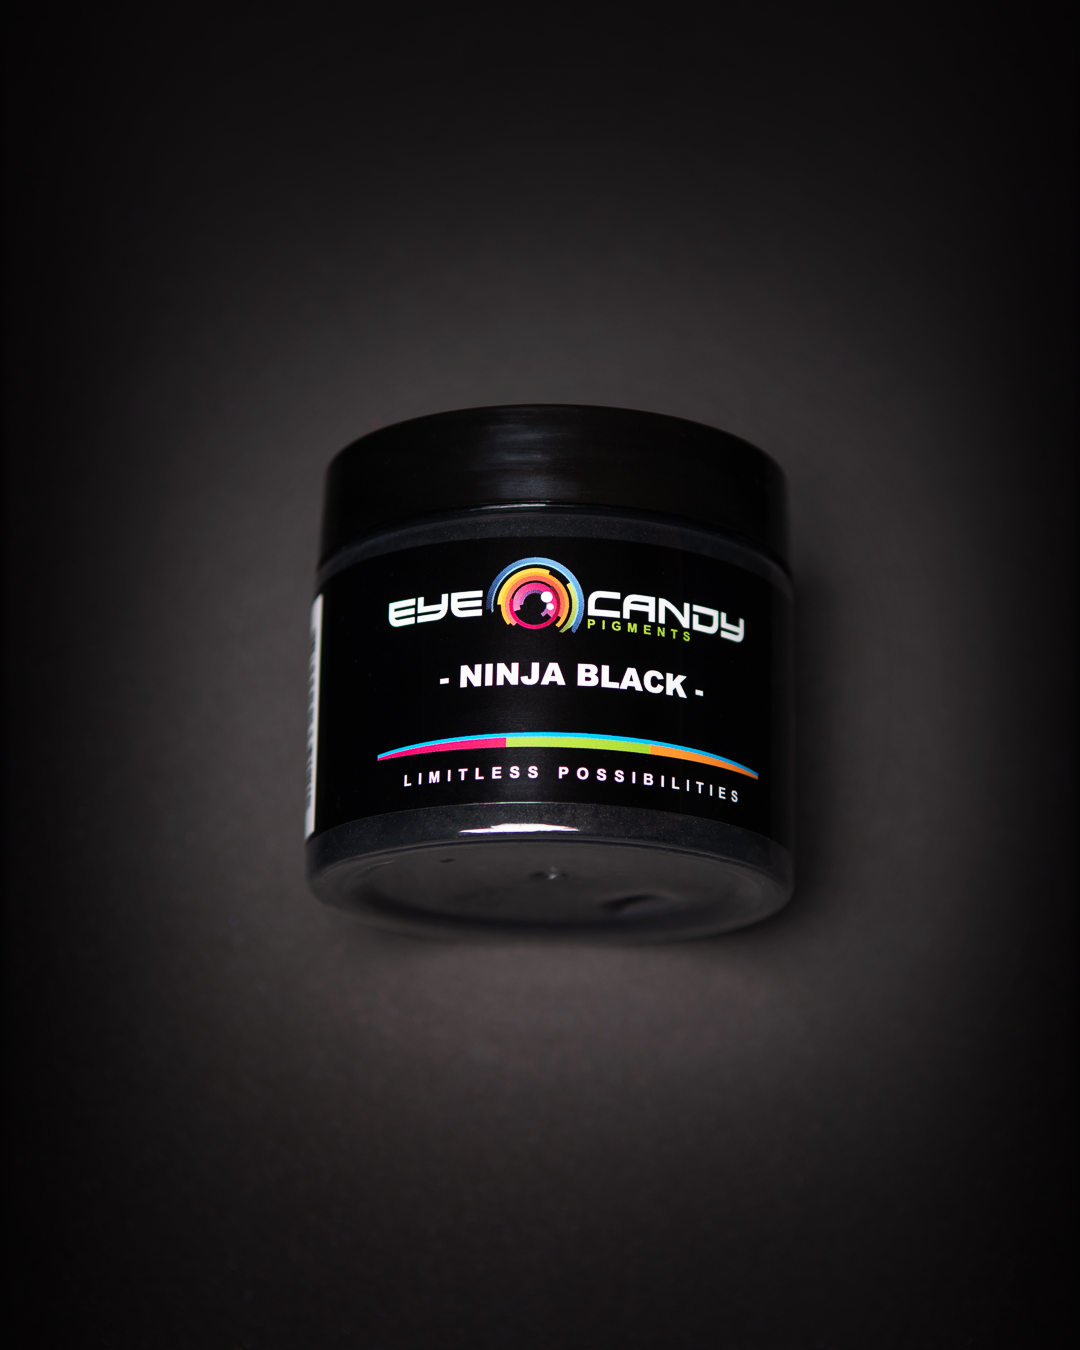 Ninja Black (Mica Powder for Epoxy Resin) - Superclear Epoxy Resin Systems